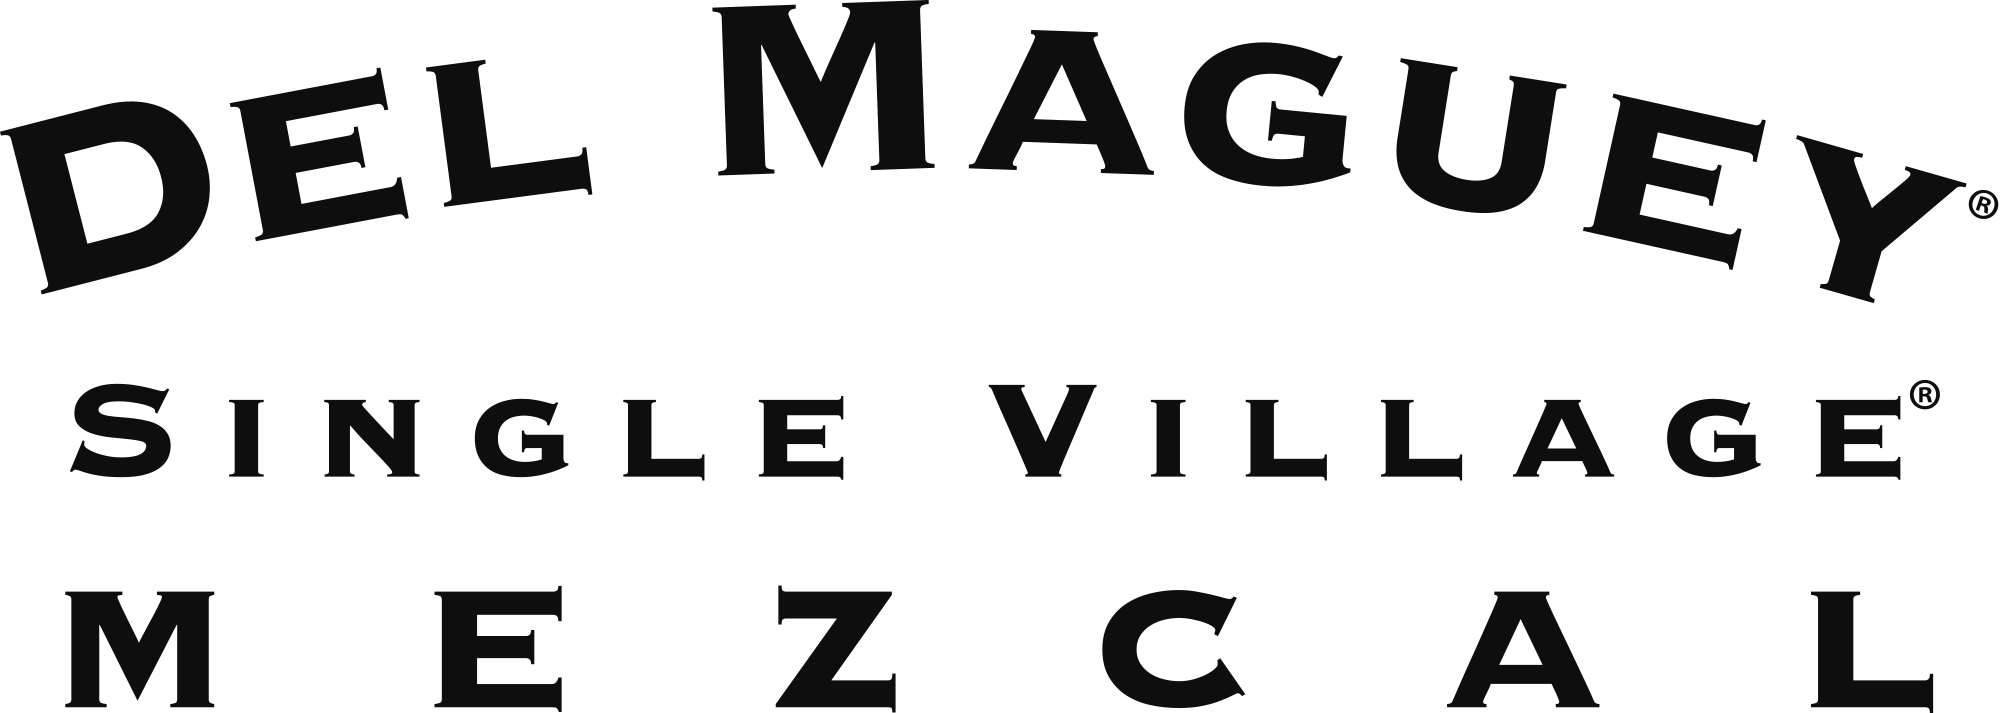 Del Maguey Logo-Black - Nick Kieffer.png